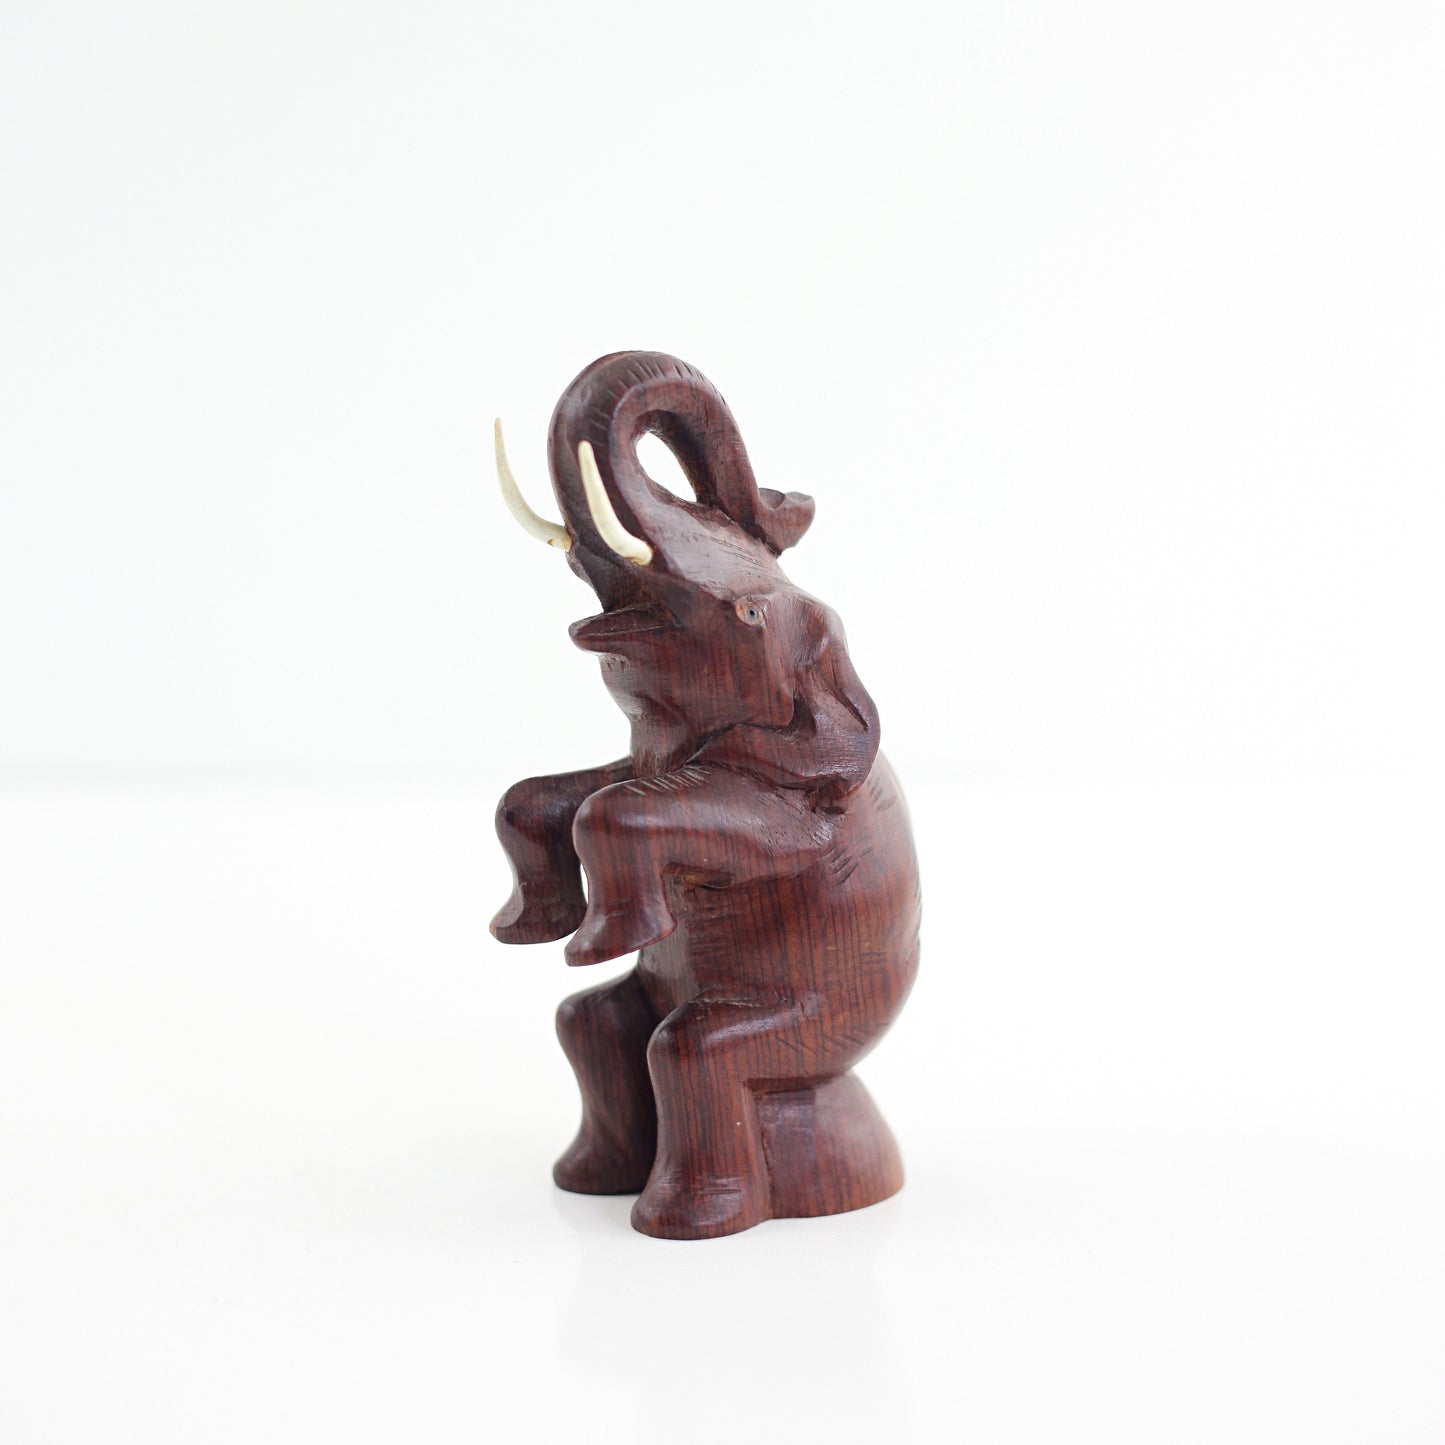 SOLD - Vintage Carved Wood Elephant Figurine